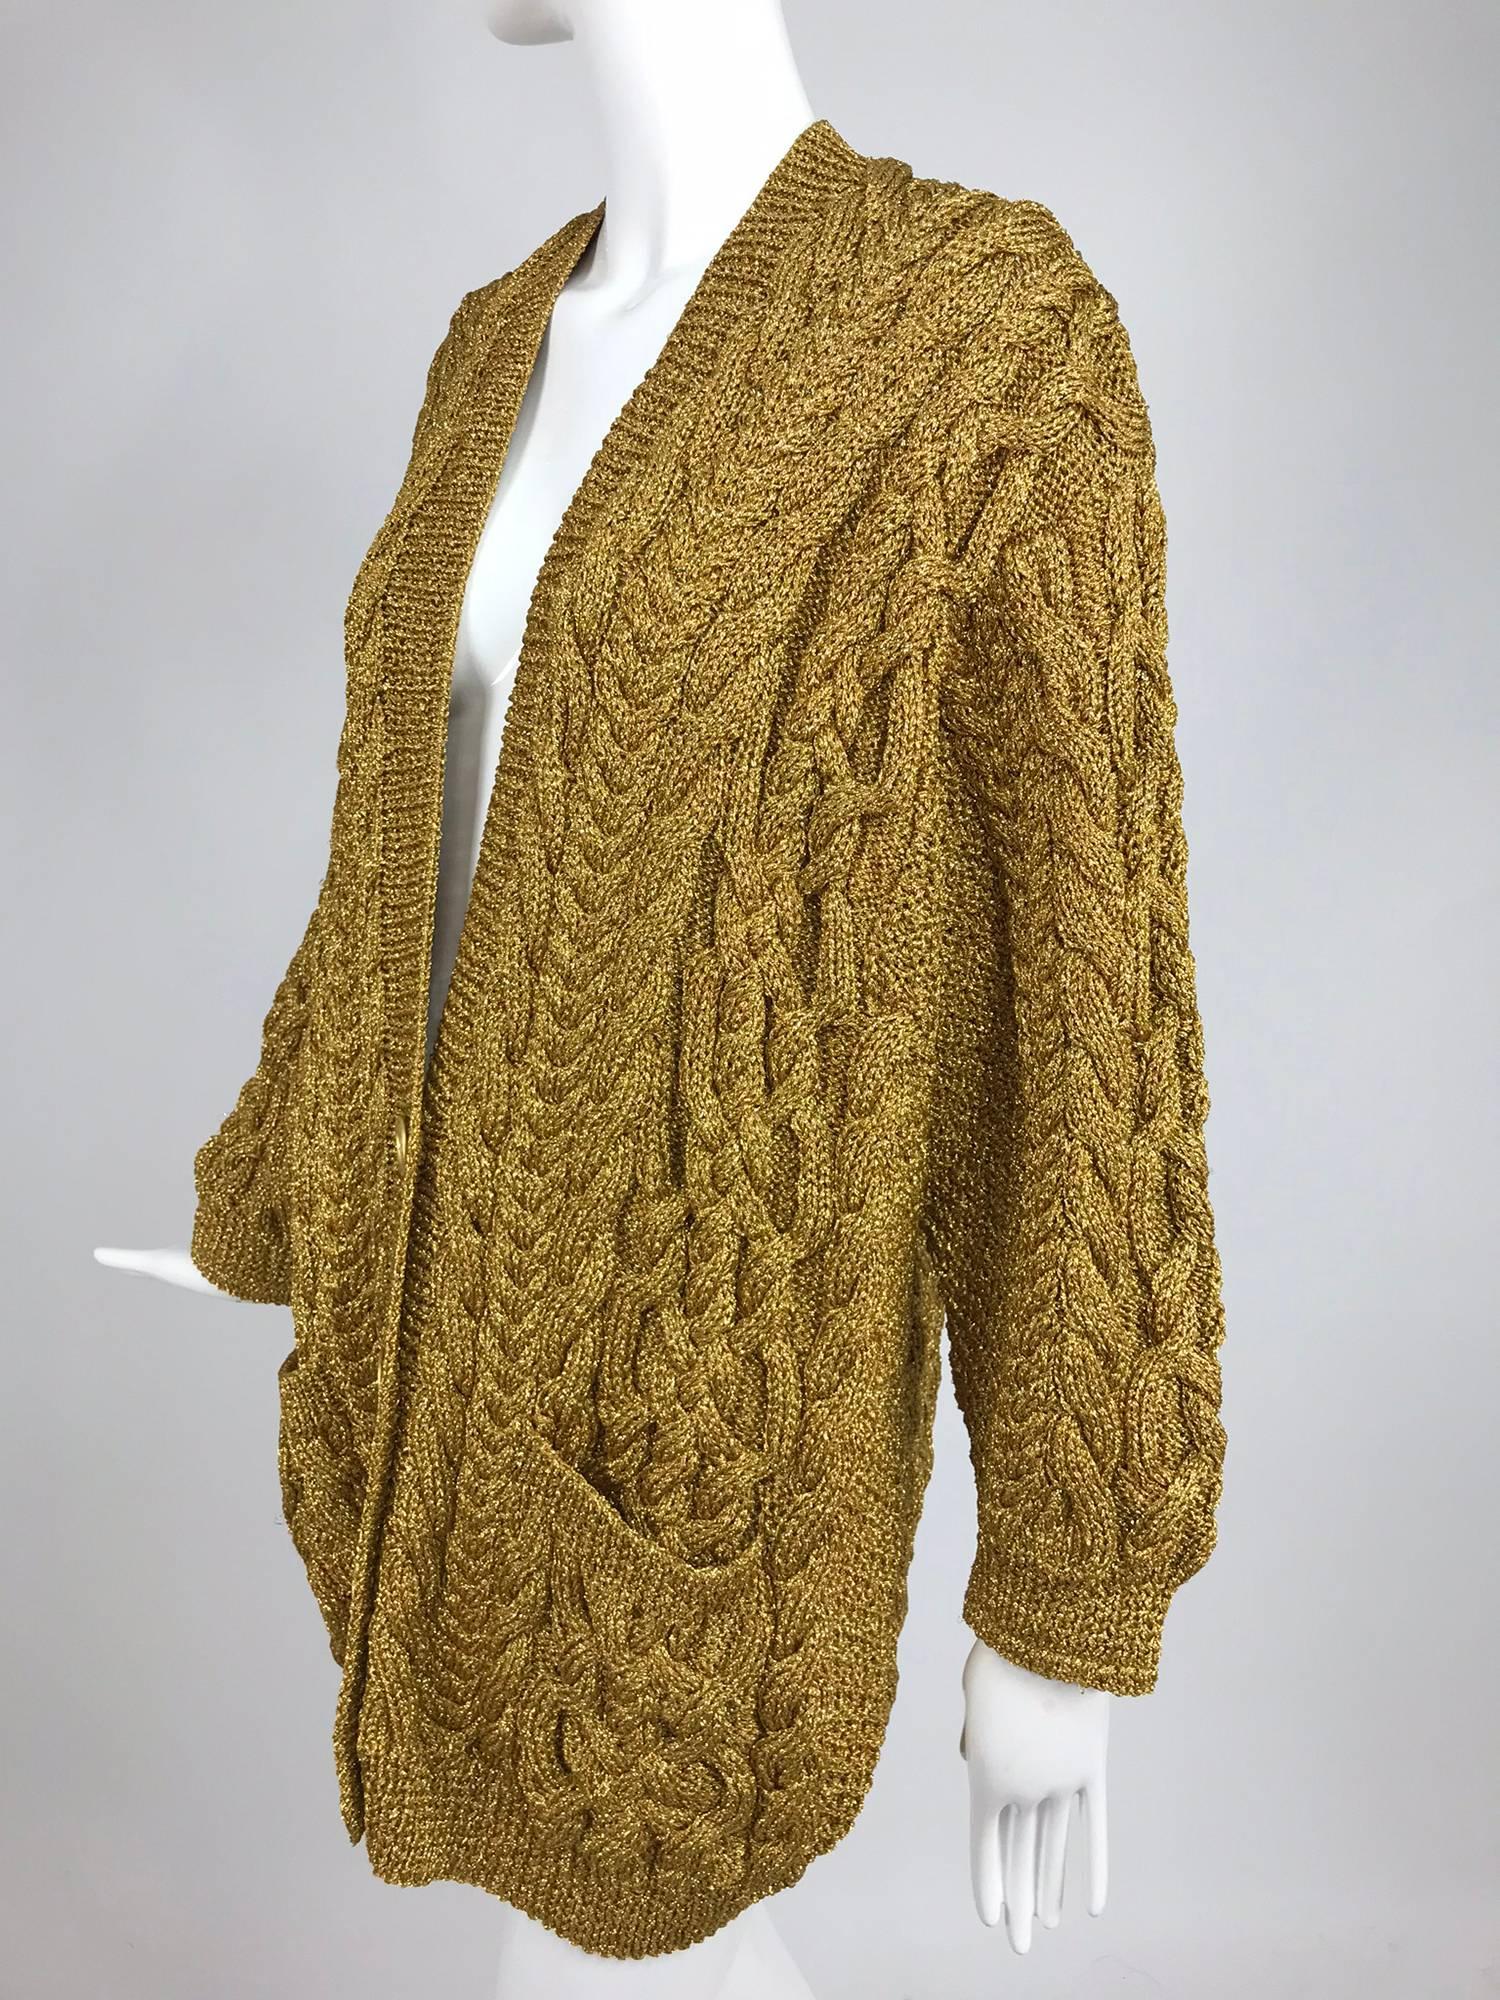 Anne Klein chunky gold metallic knit cardigan sweater 1990s 3